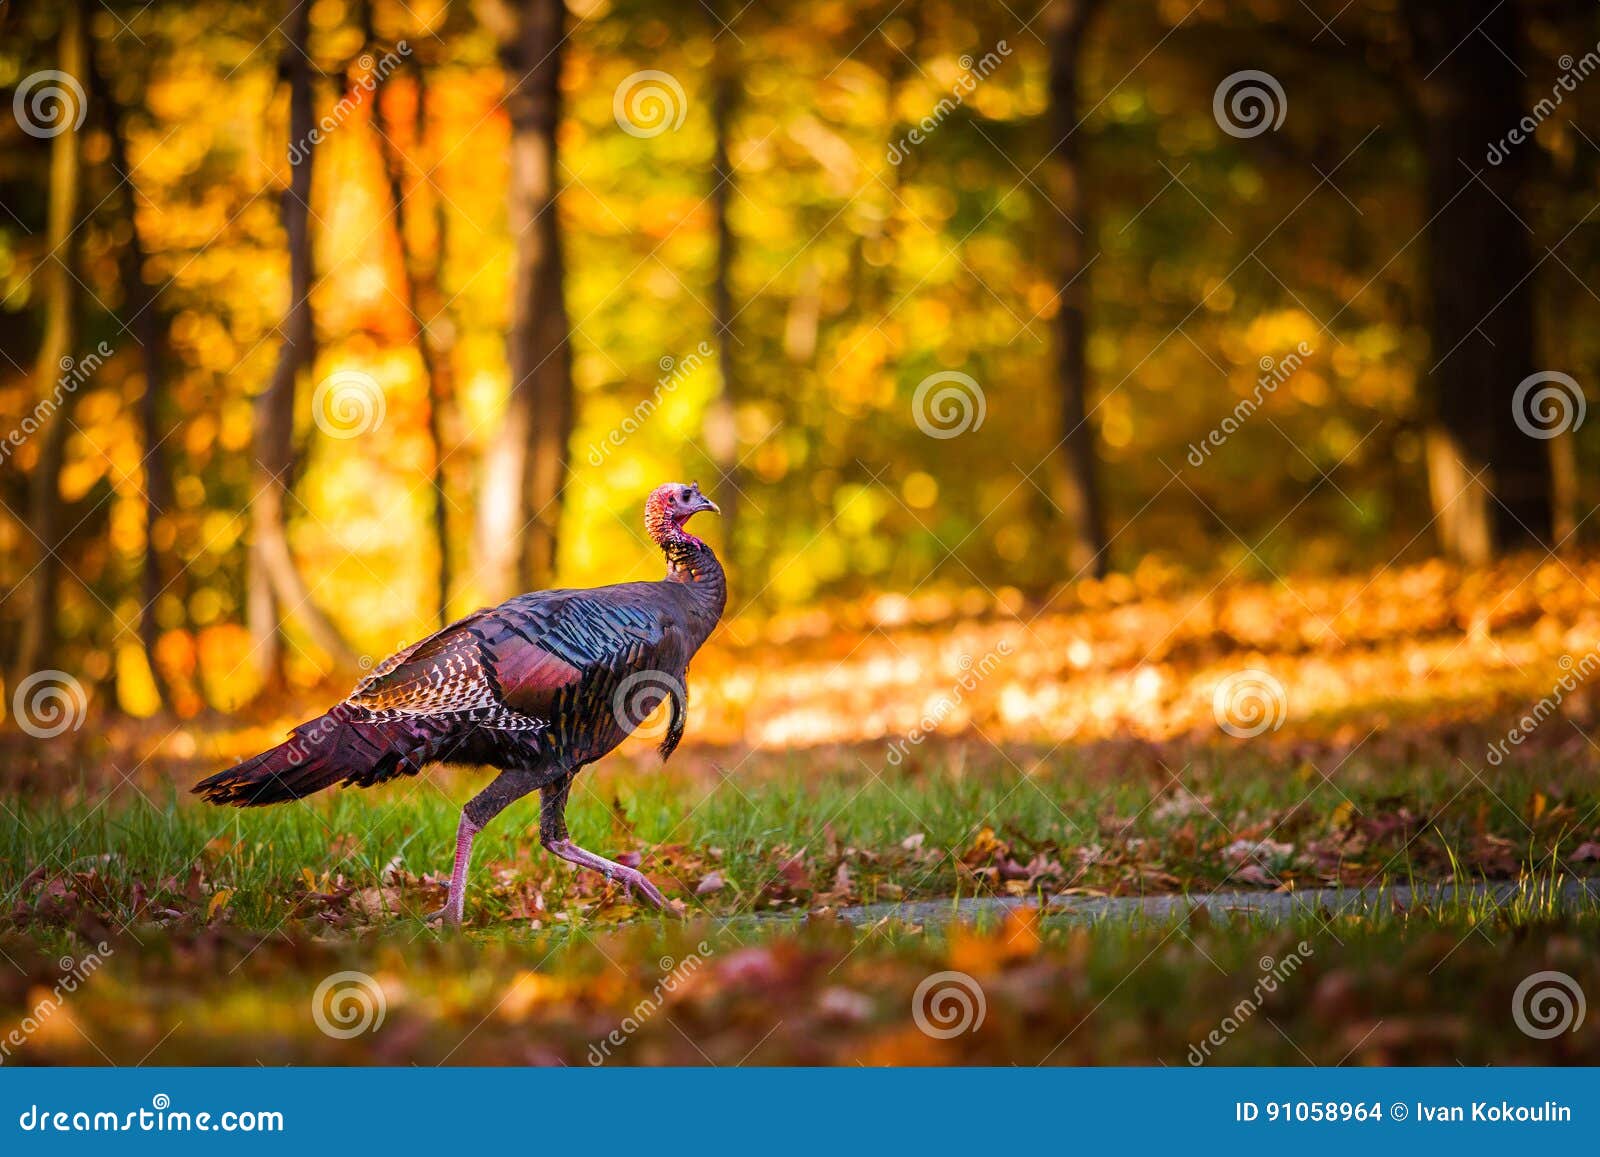 Fall turkey stock photo. Image of season, tranquil, color 91058964